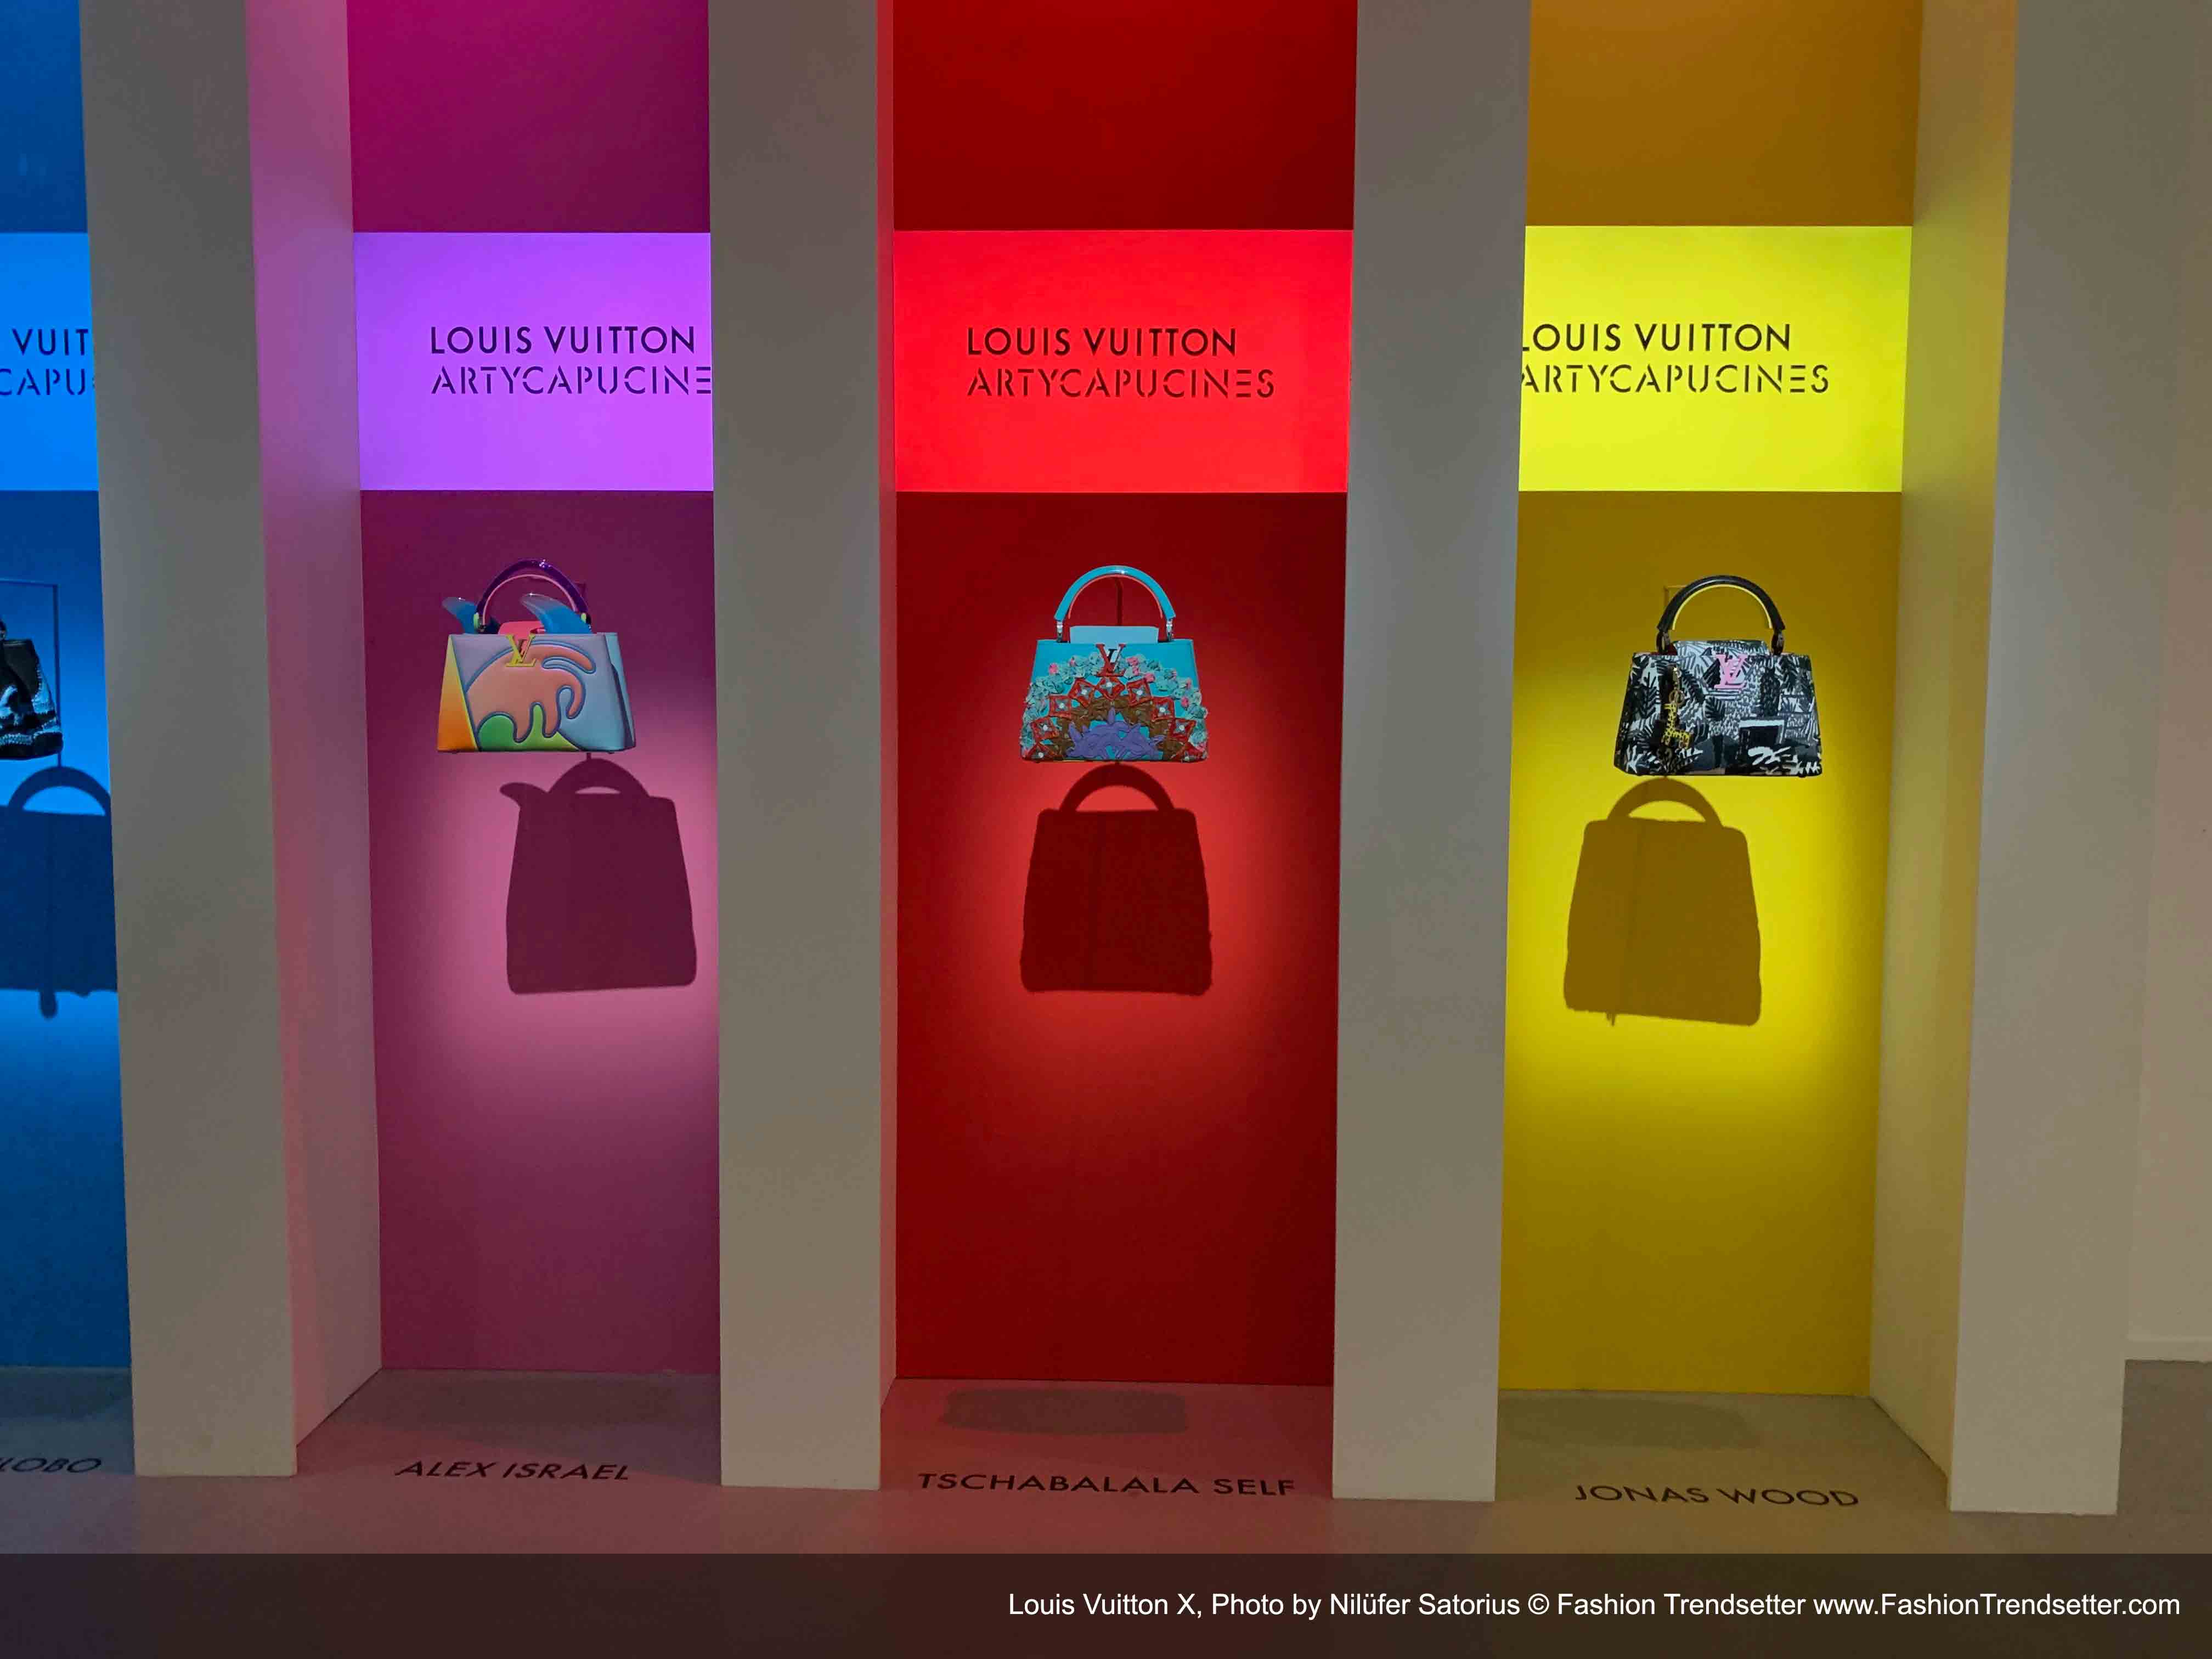 Louis Vuitton – Visual Merchandising and Store Design